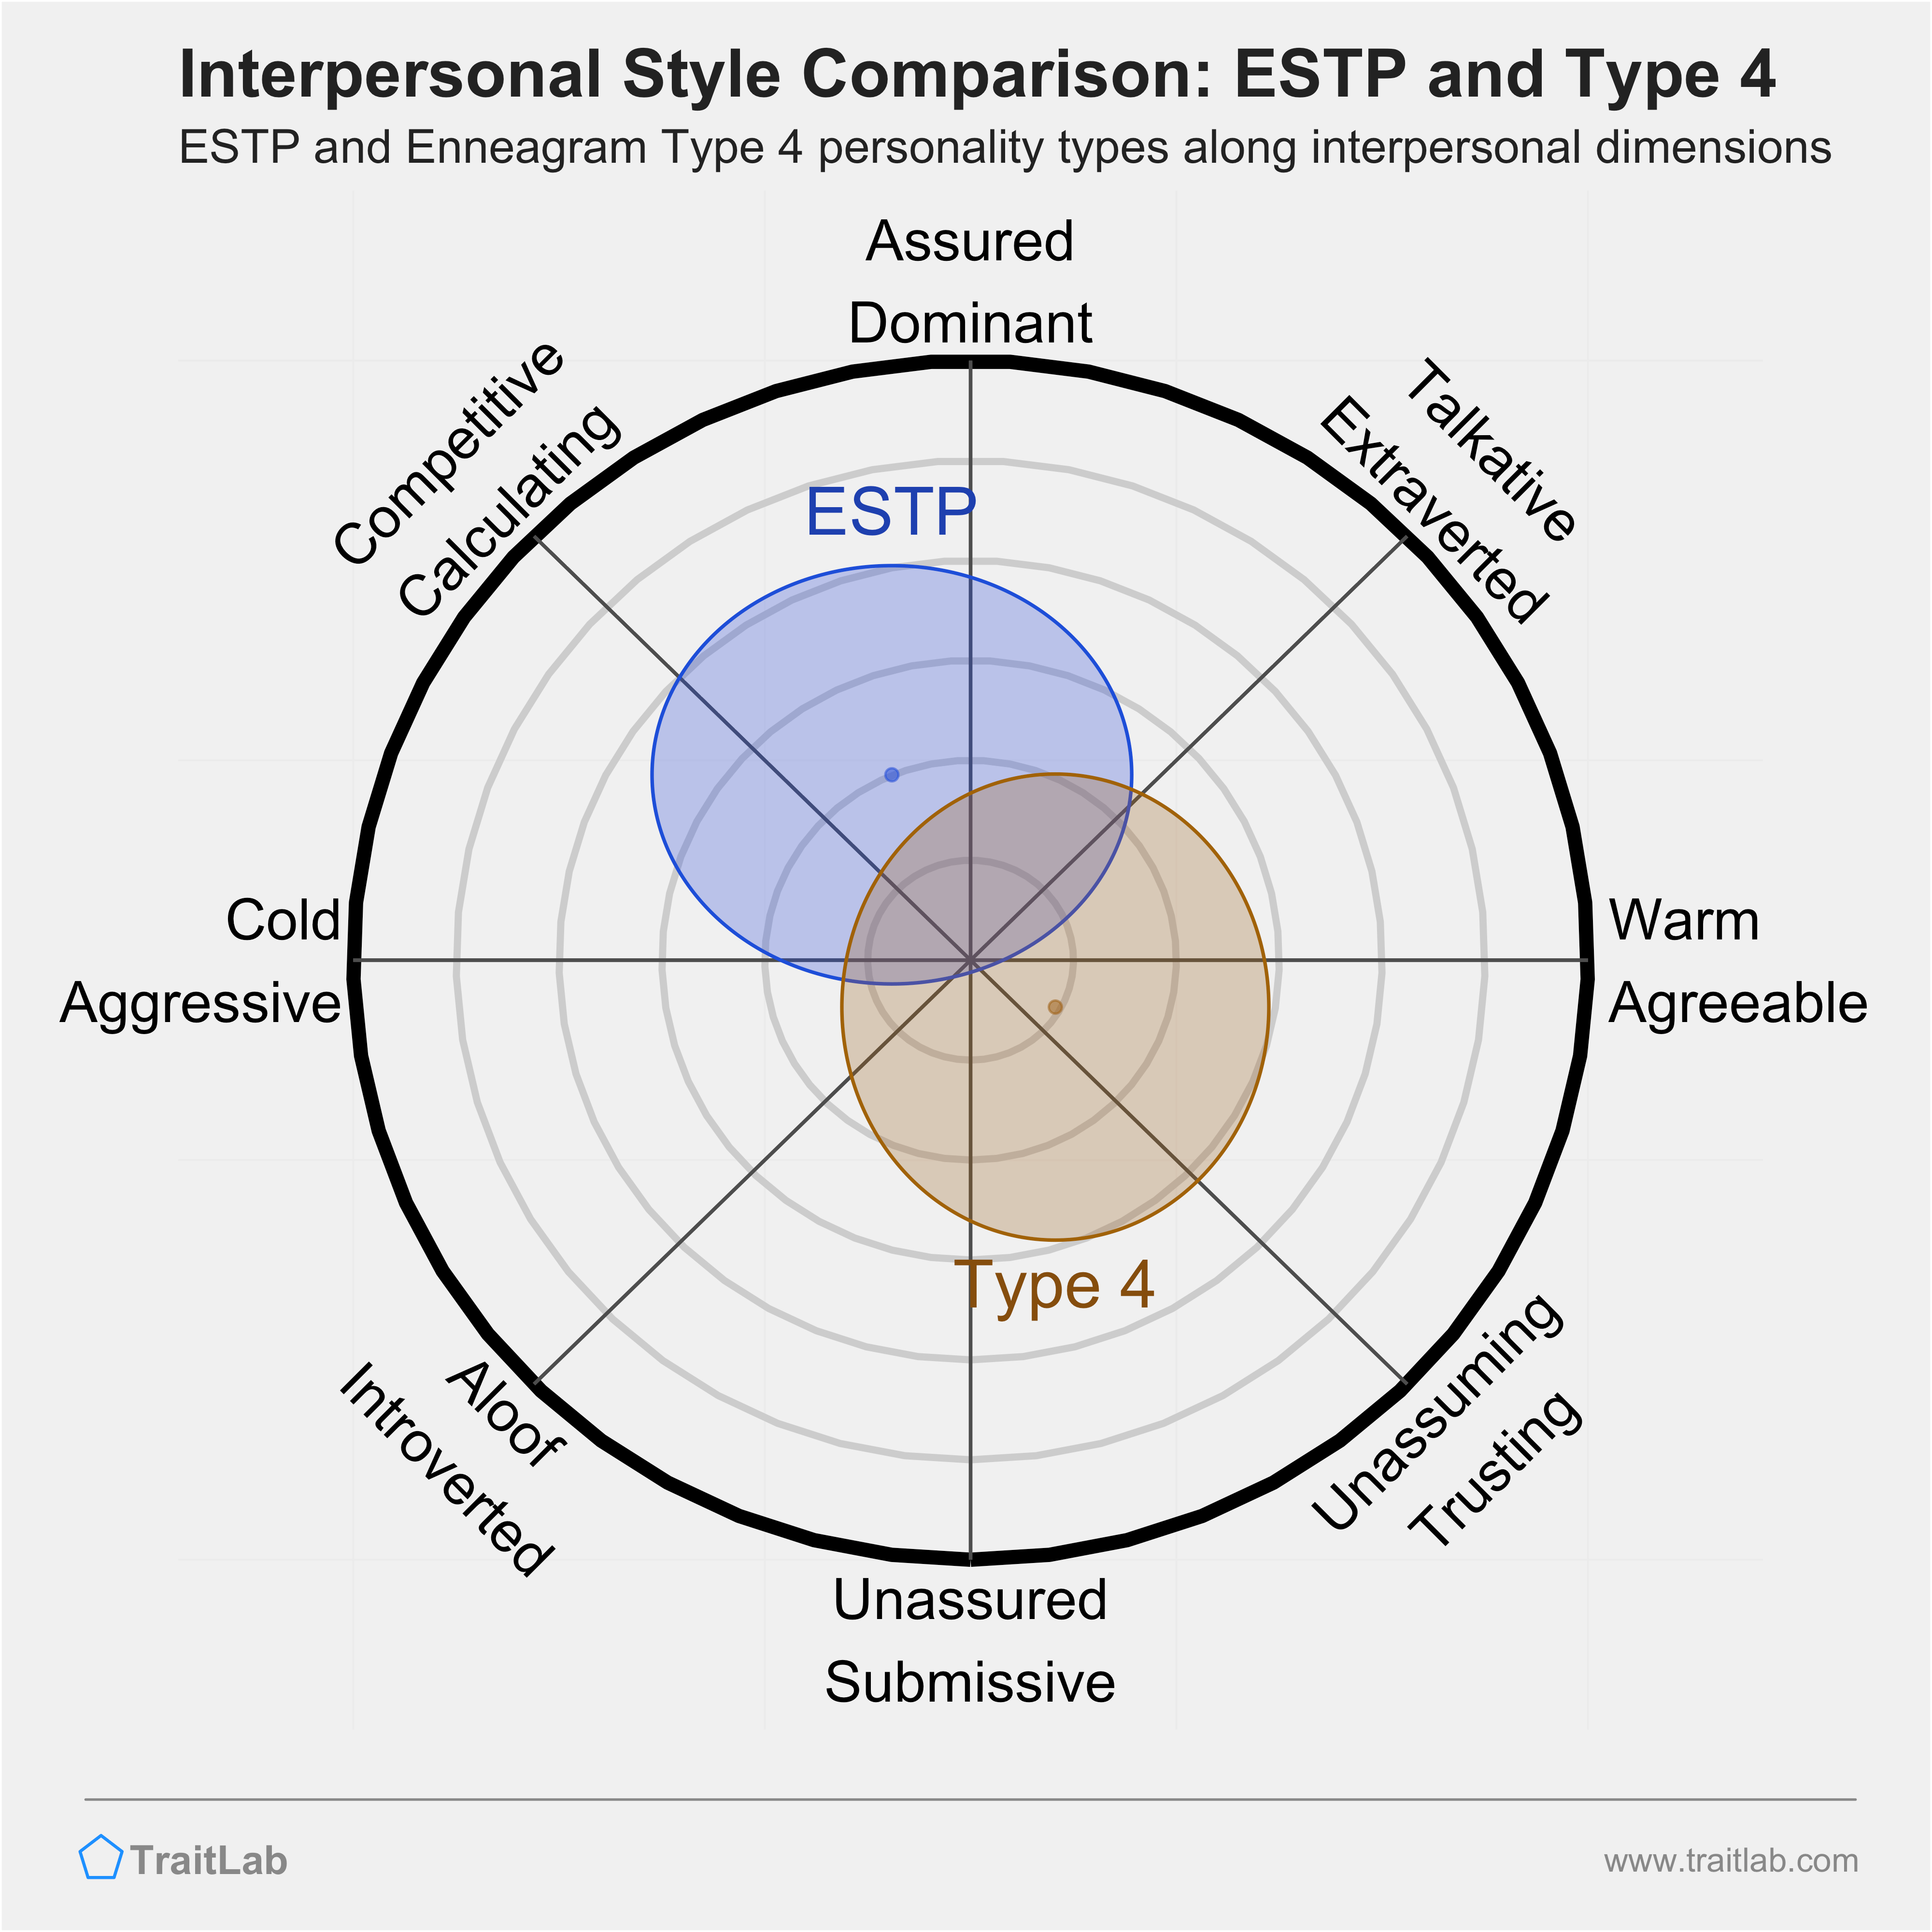 Enneagram ESTP and Type 4 comparison across interpersonal dimensions